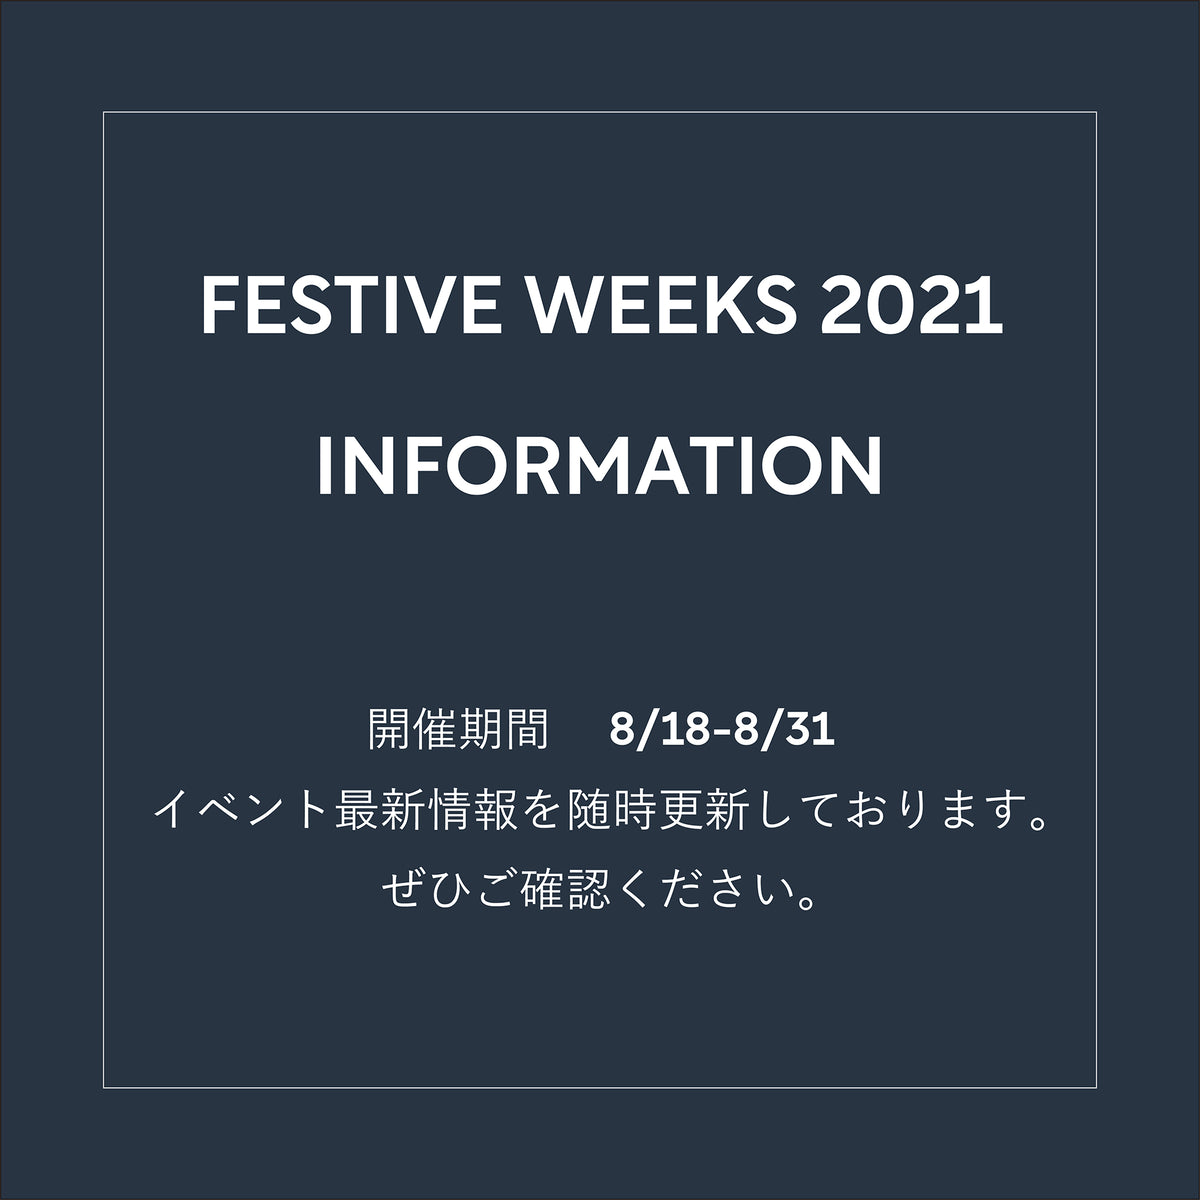 Festive Week 2021 - Update (updated August 24)